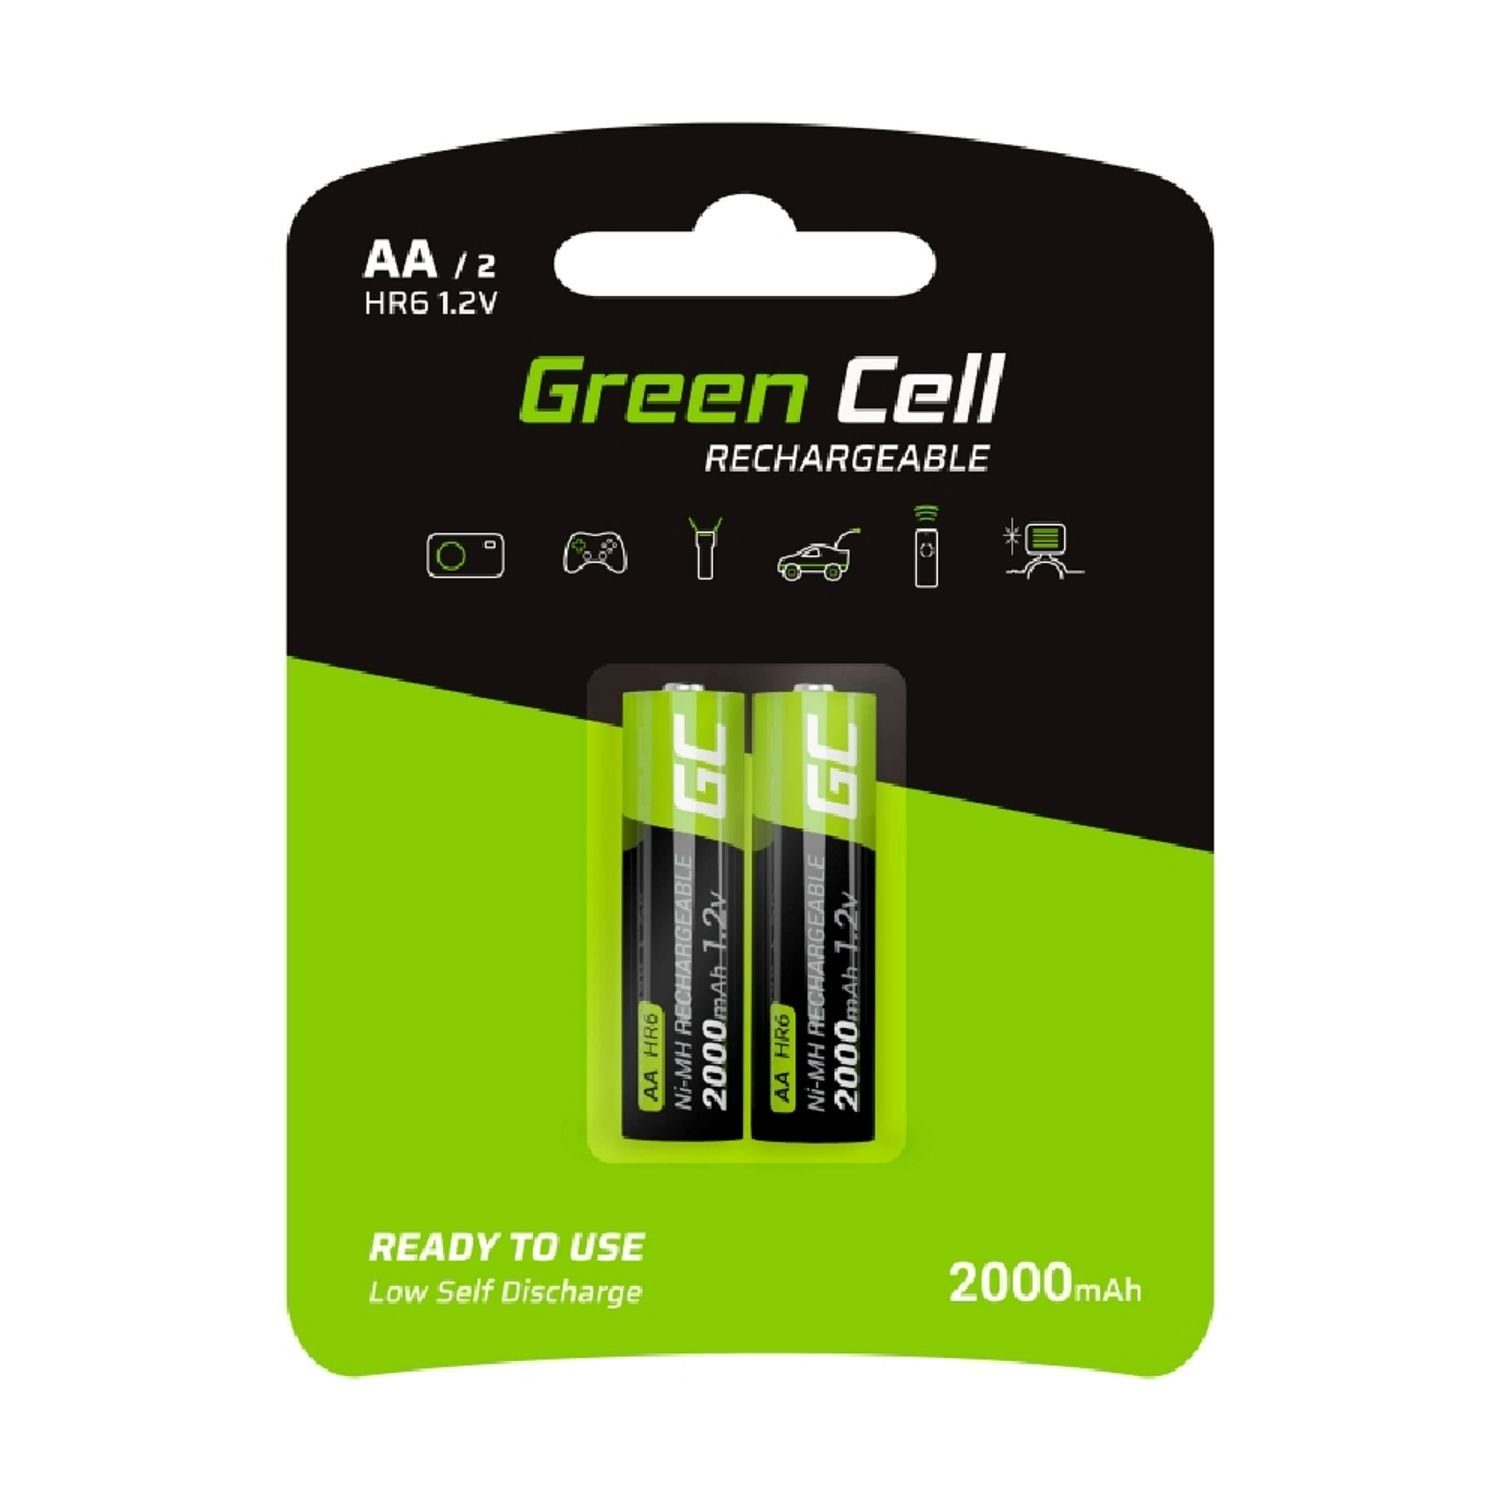 Green Cell 2x Akkumulator AA HR6 2000mAh Akkus Batterien Nickel-Hydrid Batterie